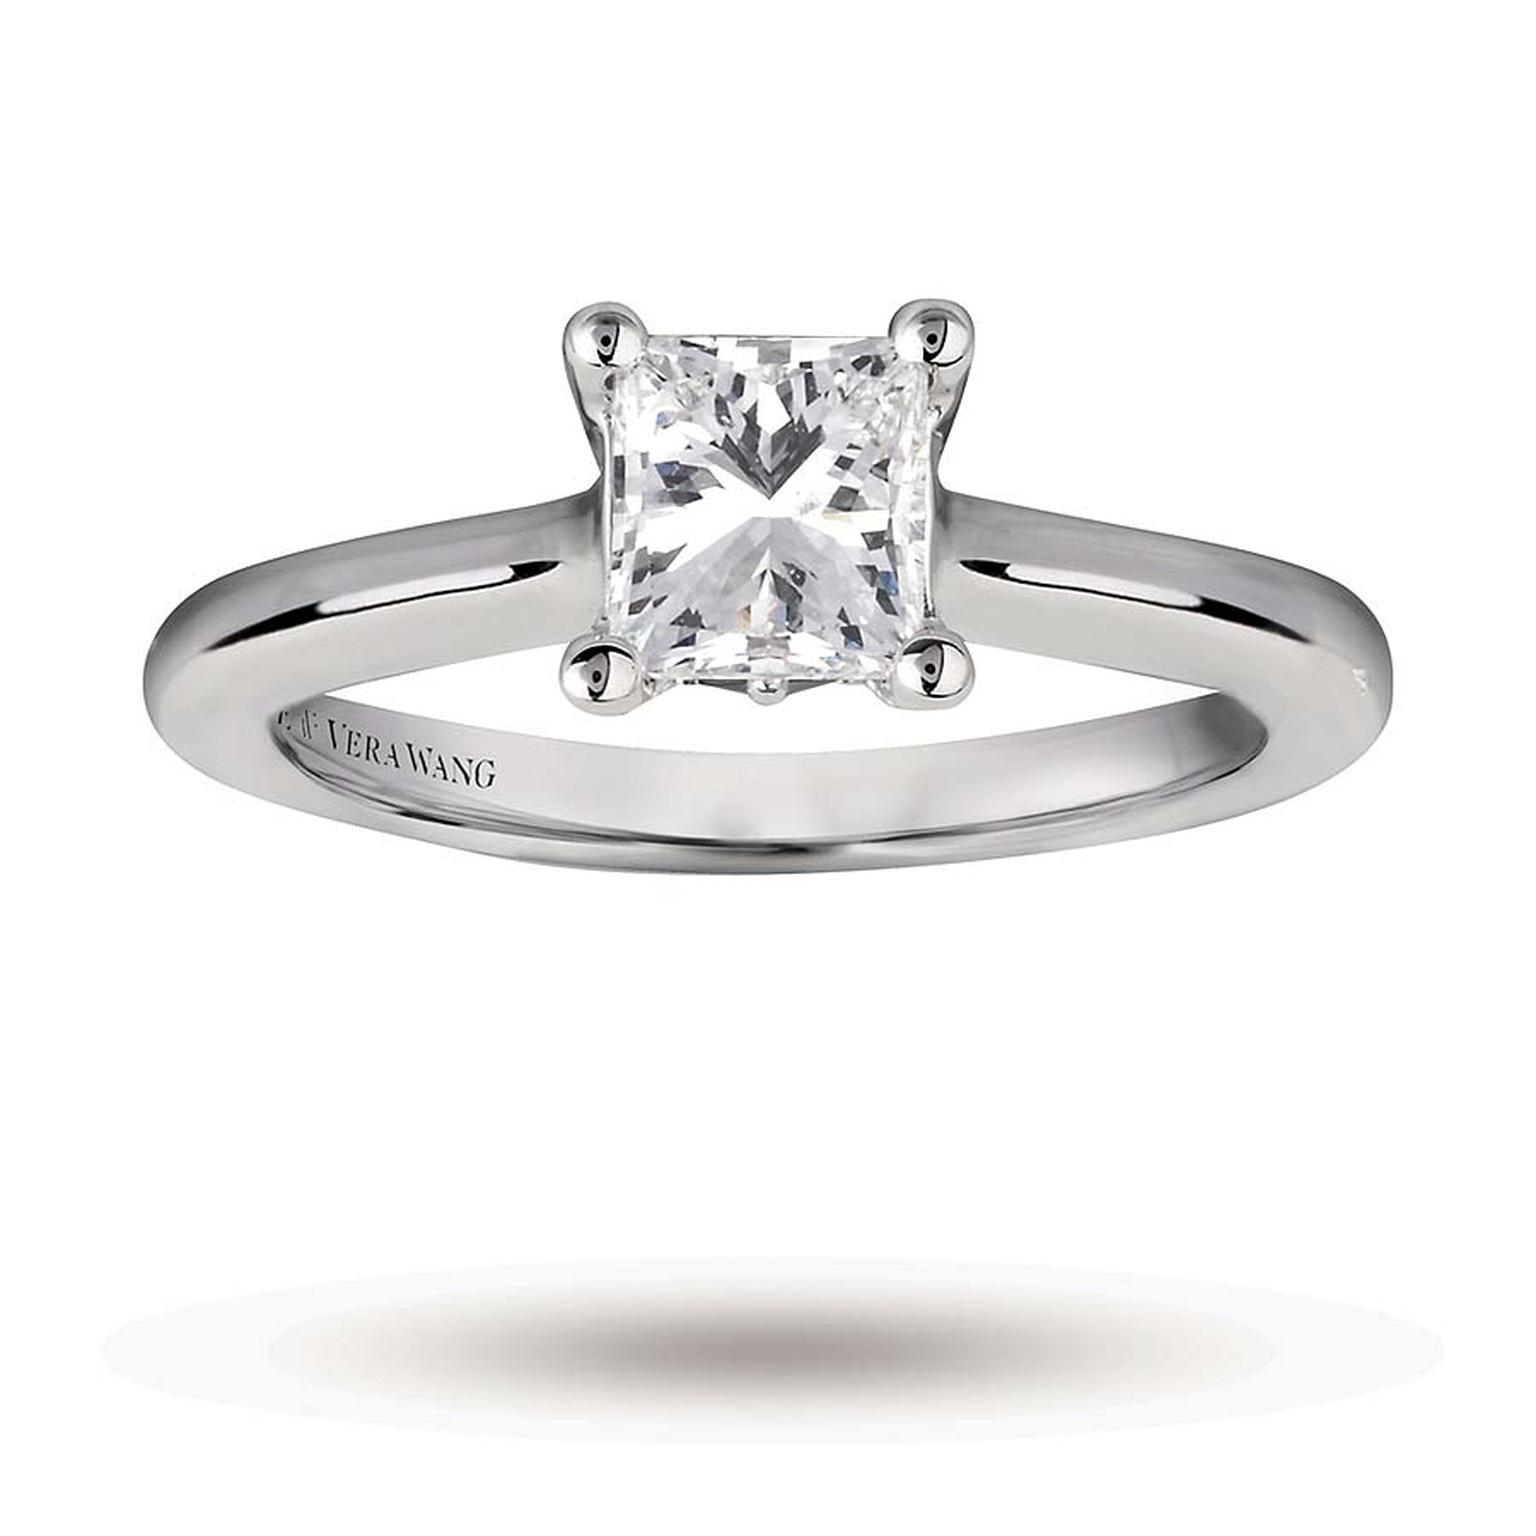 Vera Wang princess-cut diamond engagement ring in white gold (£3,500).